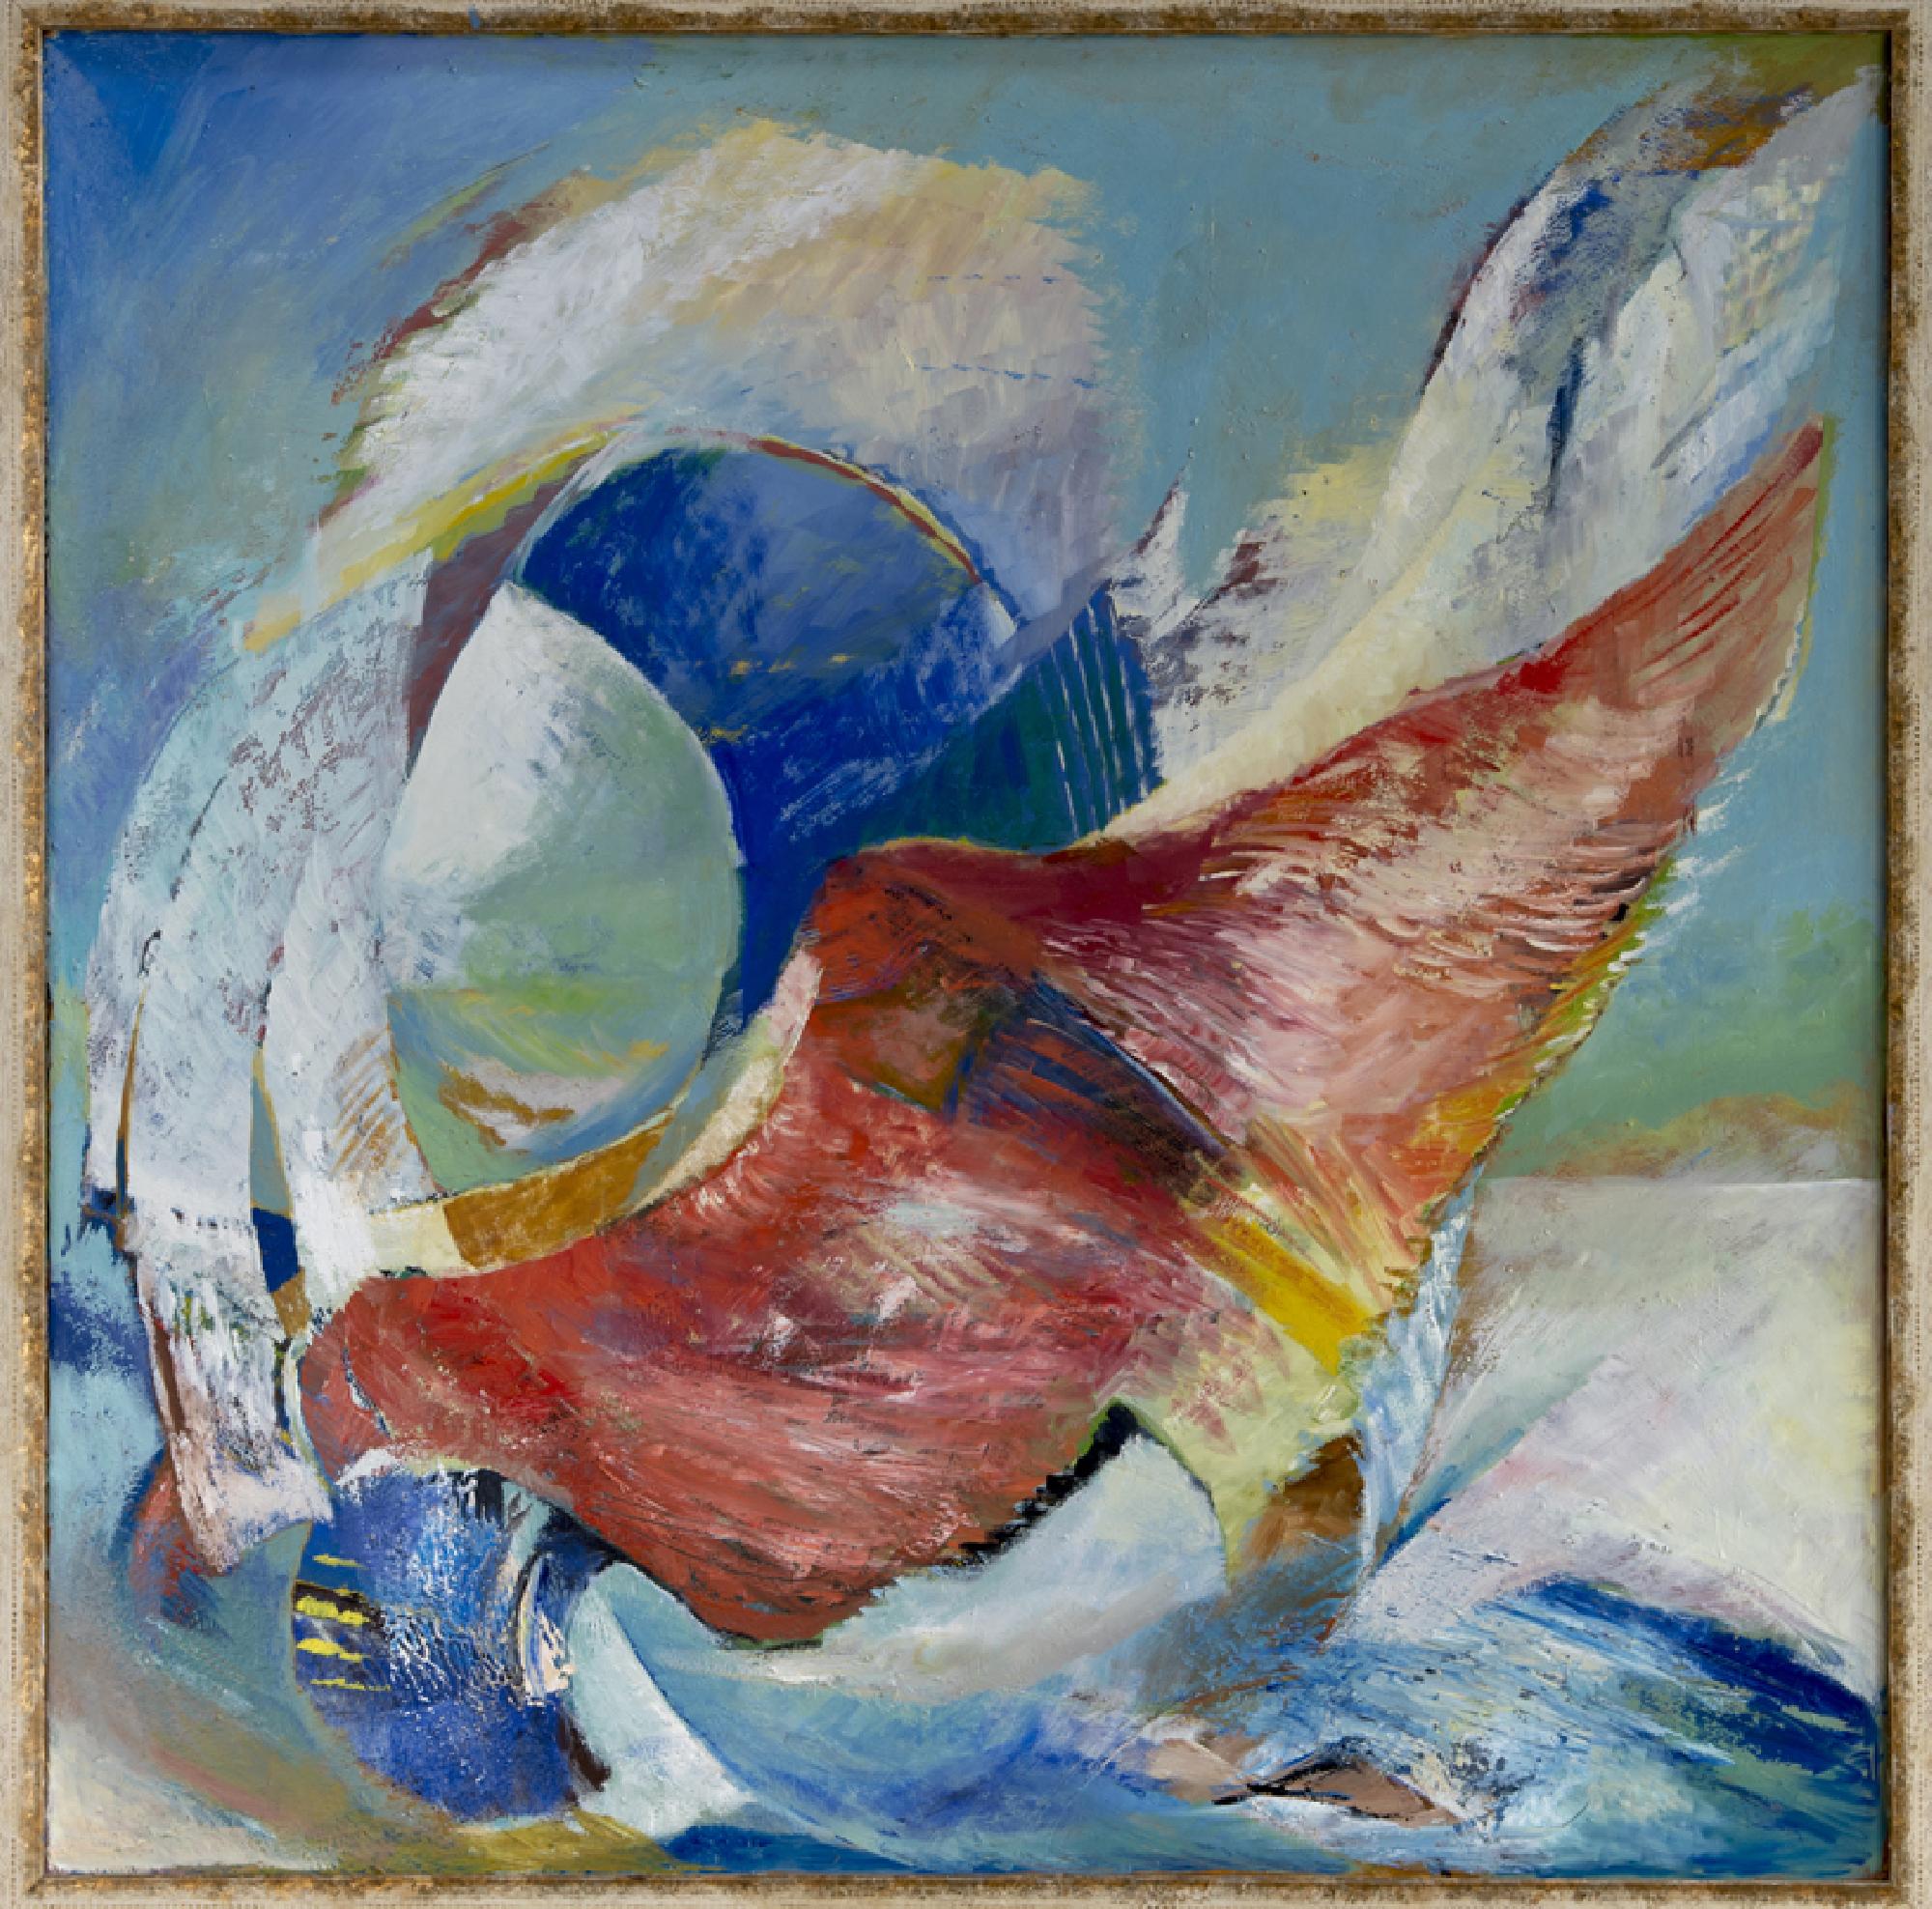 Leonard Lorenz: Feuervogel
2014-2016
120 × 120cm
Oil on canvas